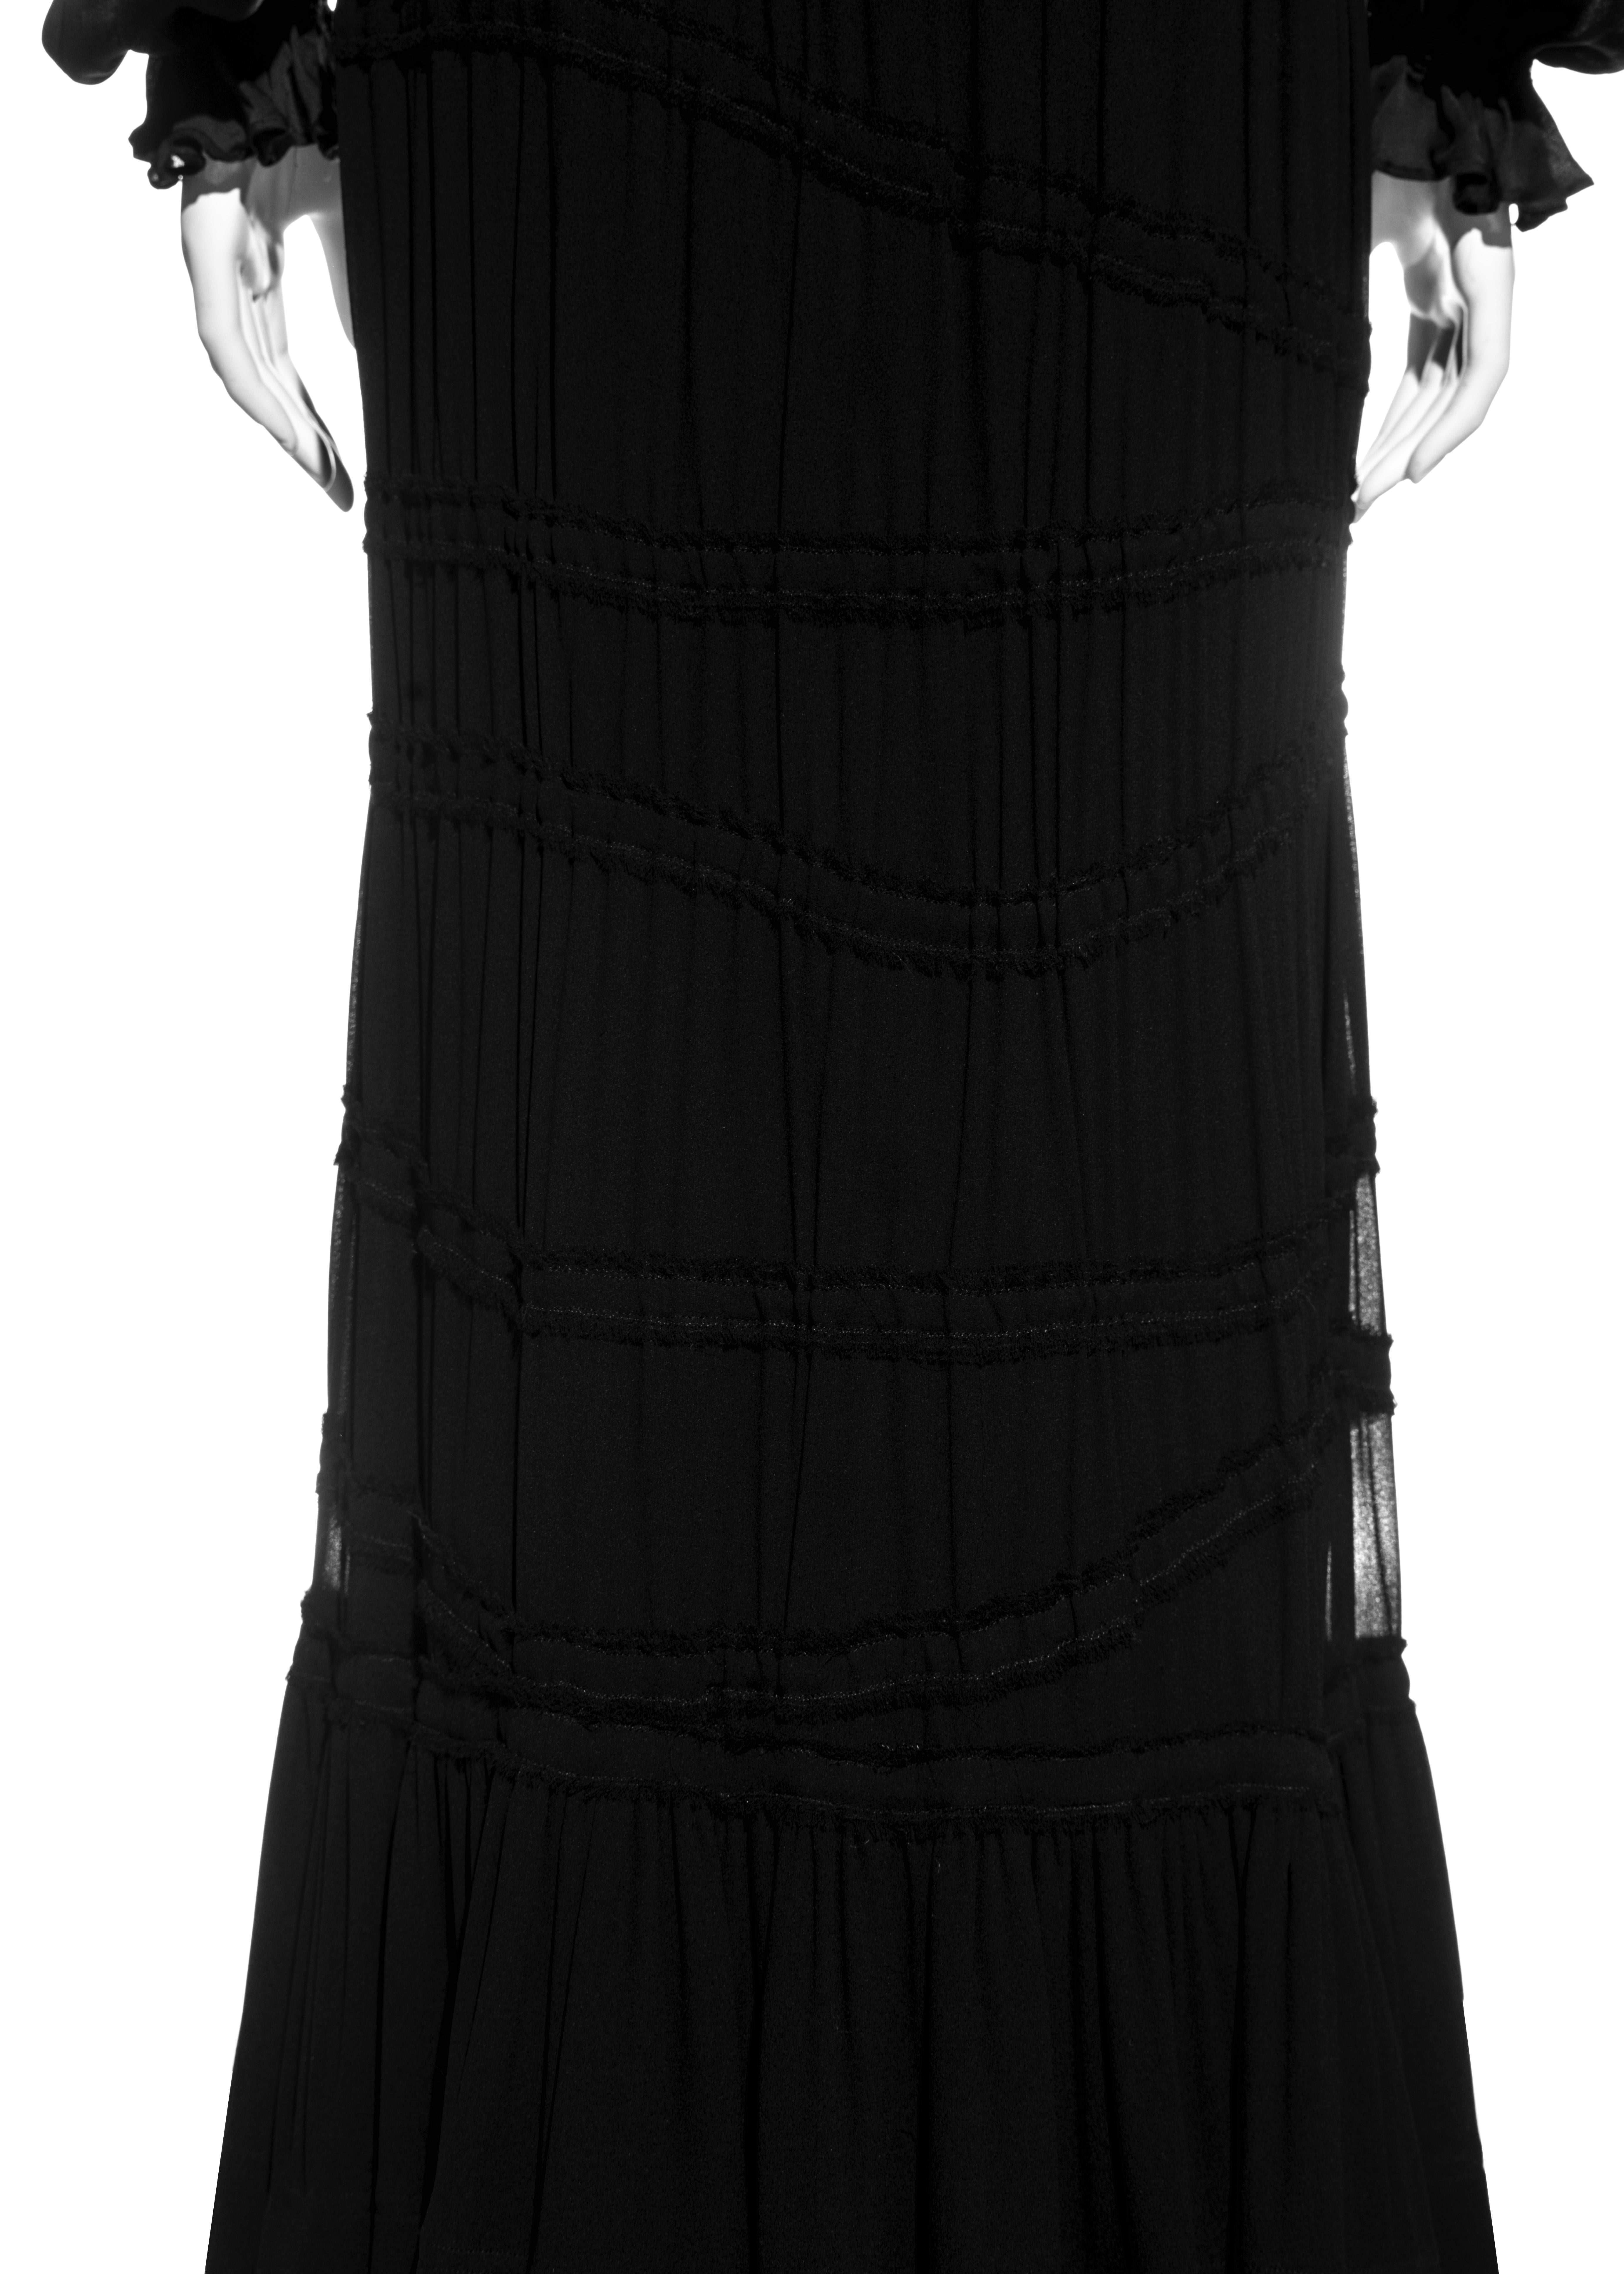 Yves Saint Laurent by Tom Ford black silk poet blouse and maxi skirt, fw 2001 2